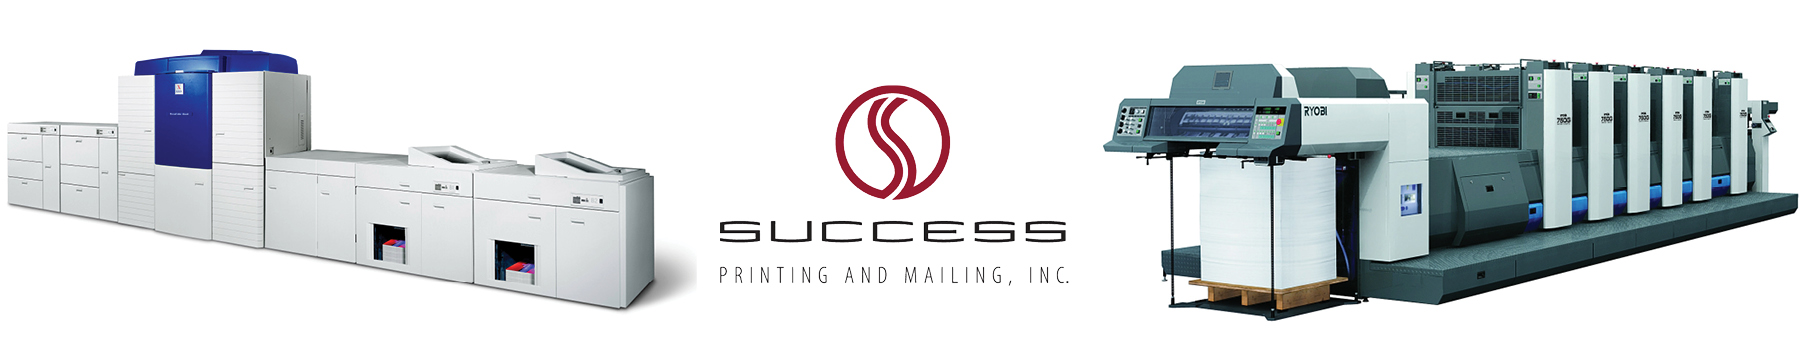 Foil Stamping Success Printing And Mailing Inc Norwalk Ct Success